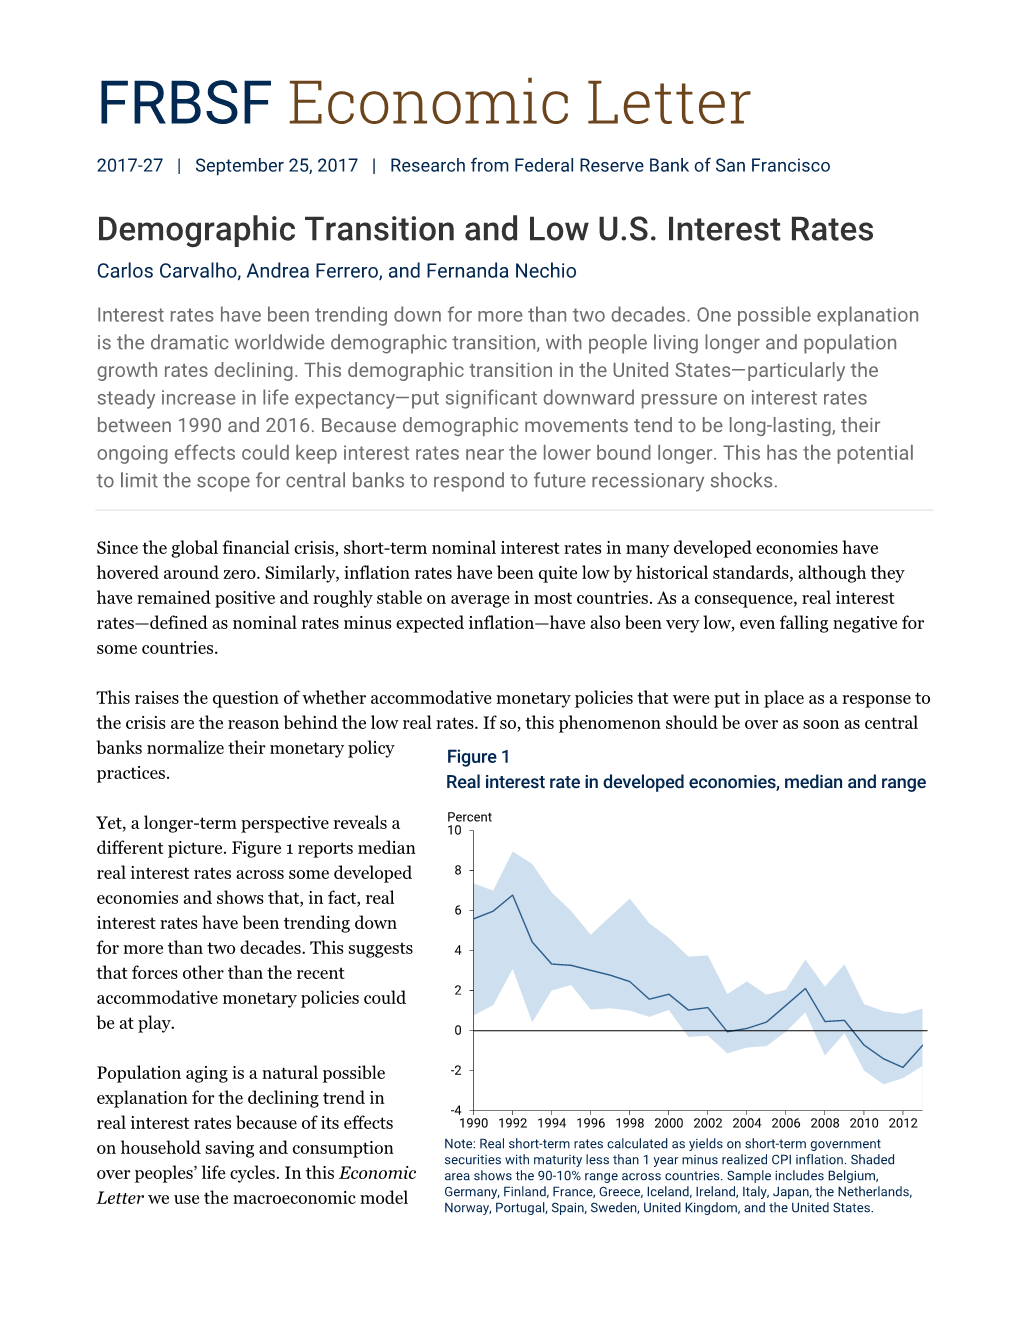 Demographic Transition and Low U.S. Interest Rates Carlos Carvalho, Andrea Ferrero, and Fernanda Nechio